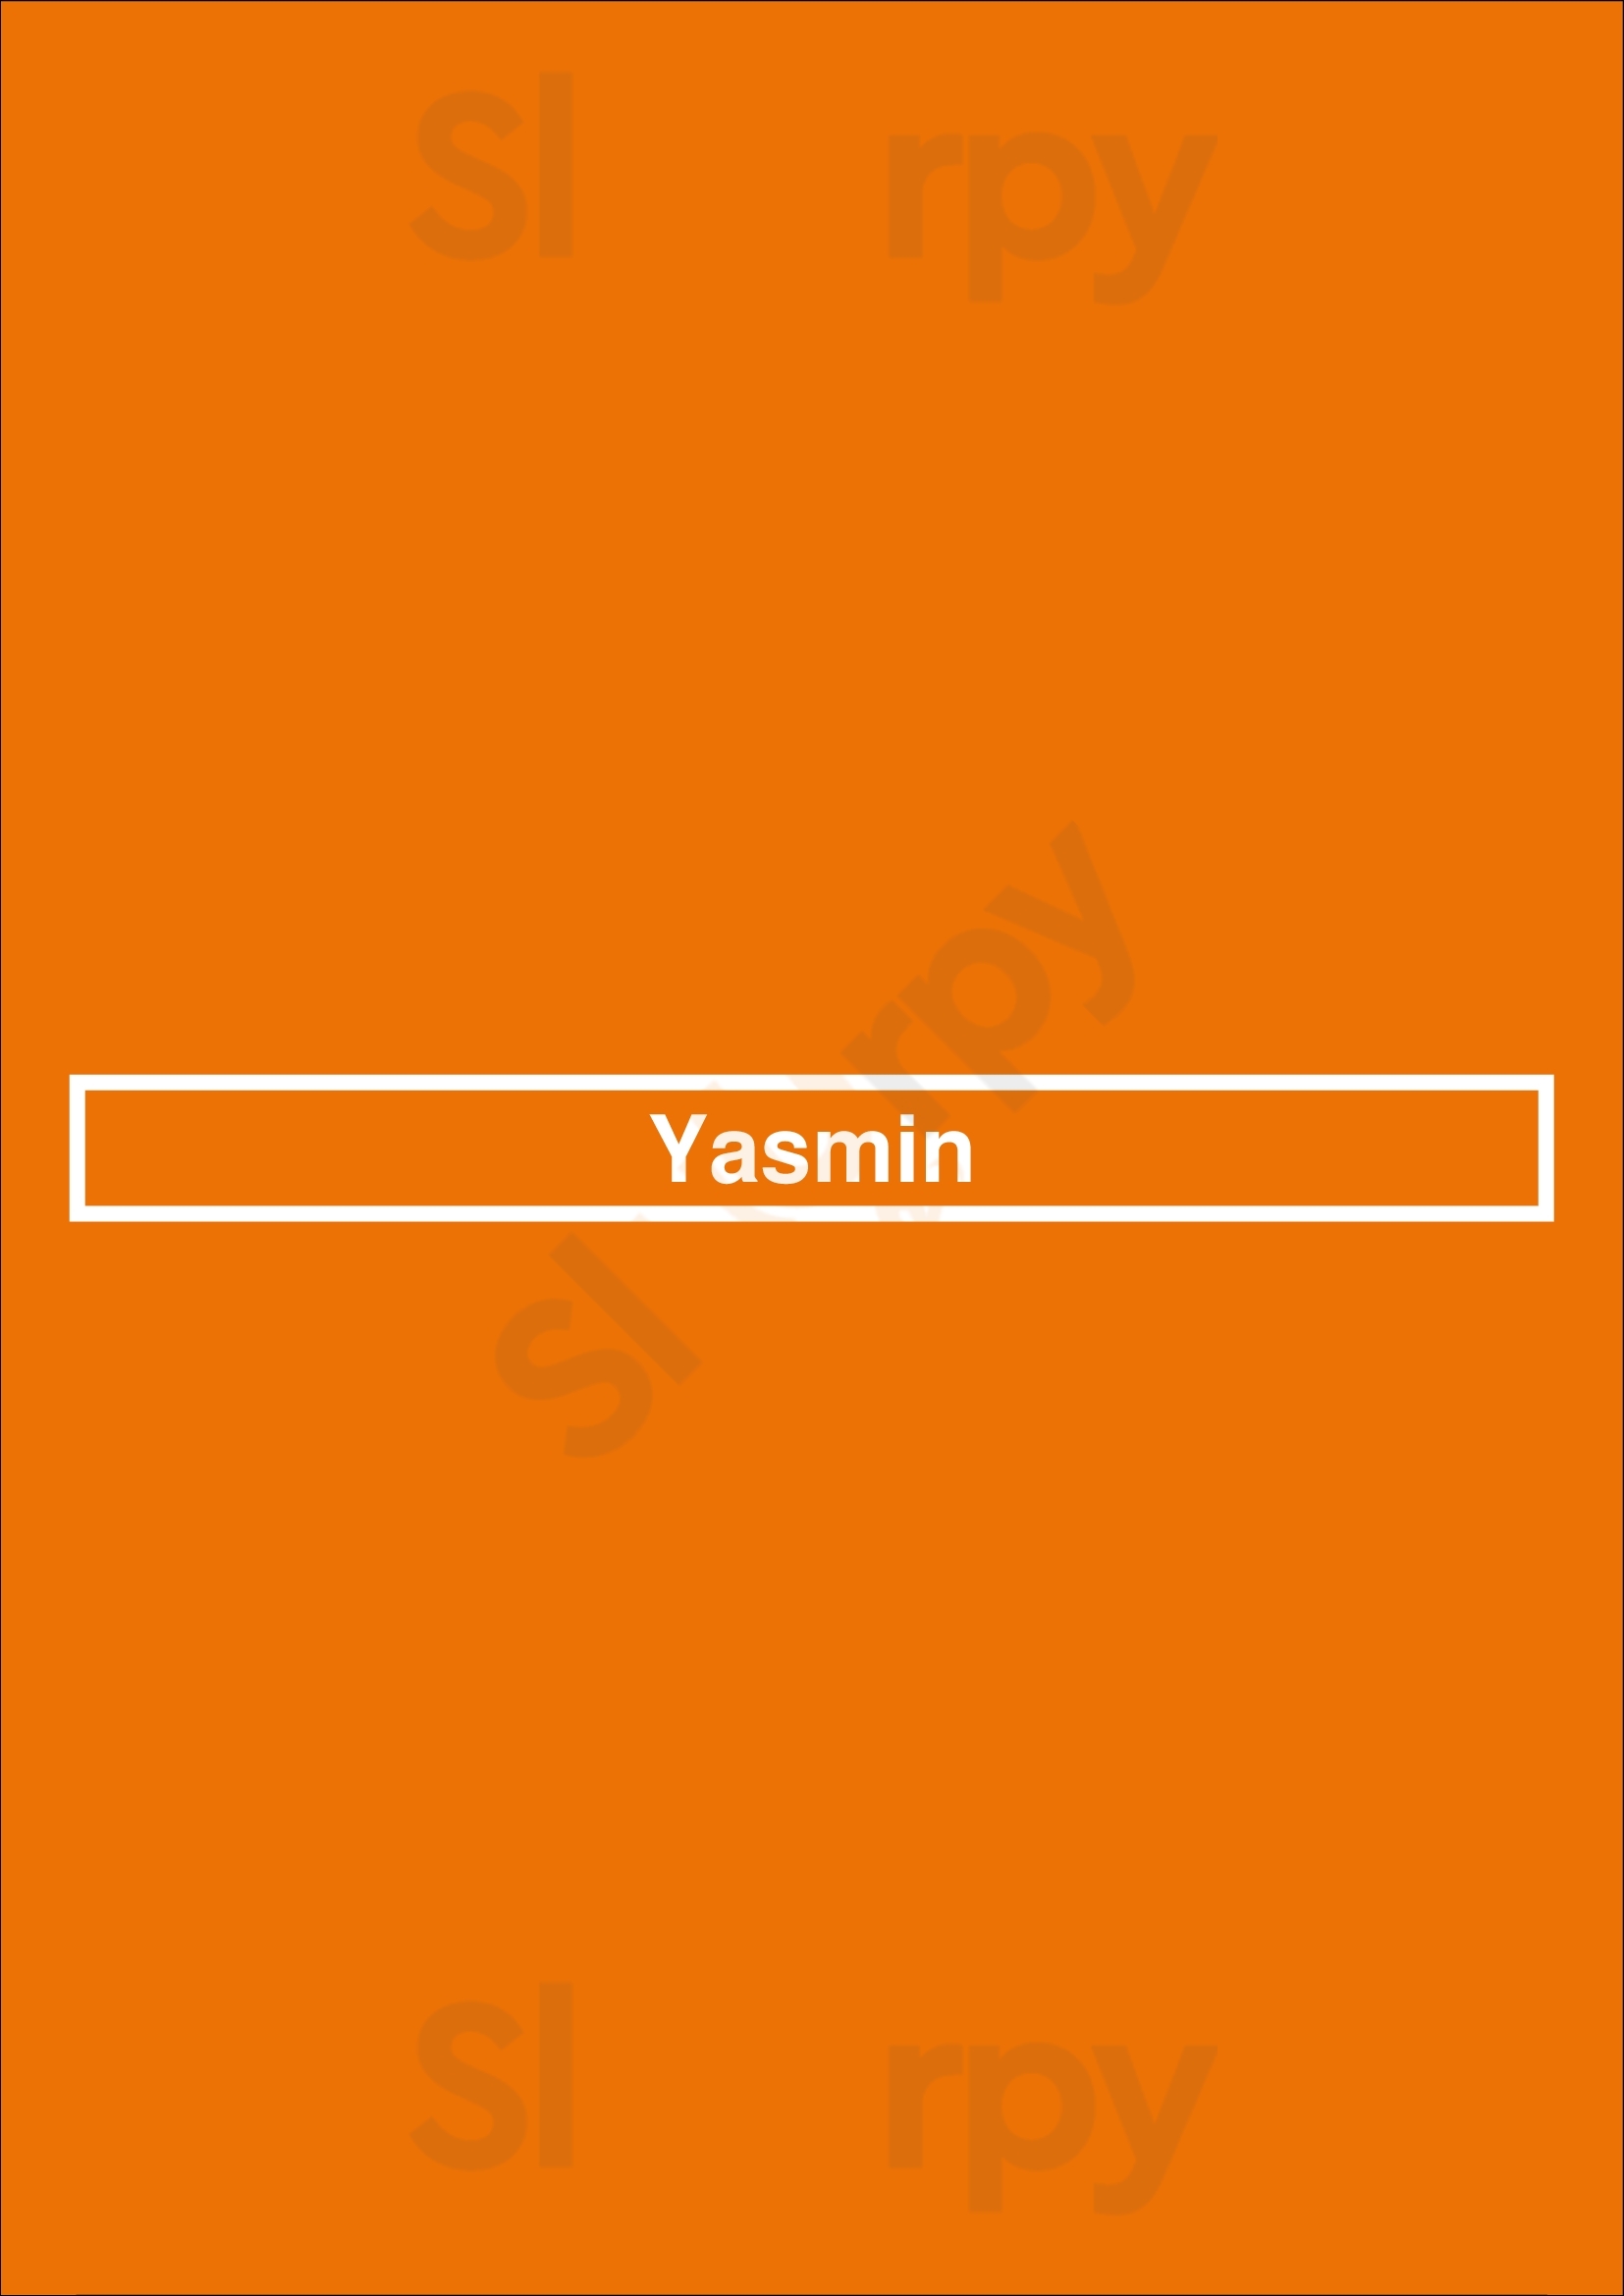 Yasmin Paris Menu - 1